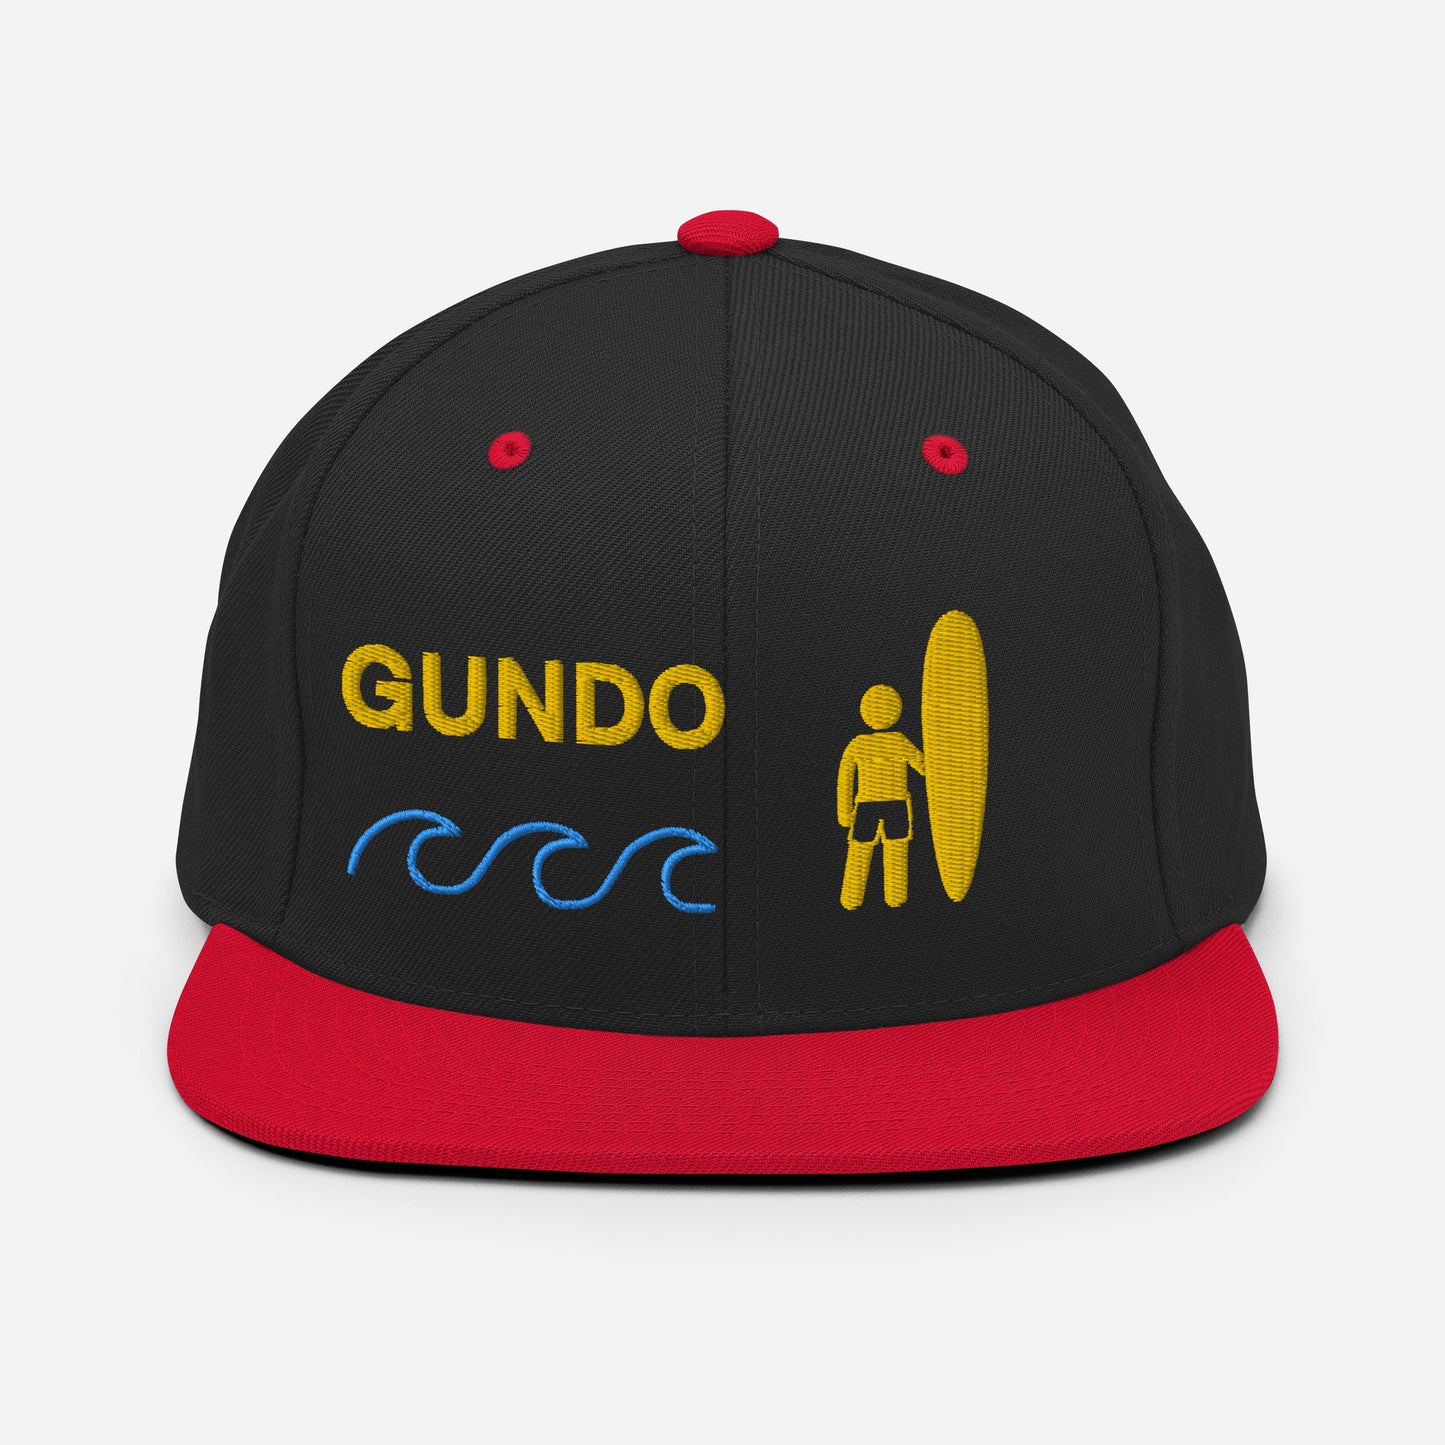 El Segundo - GUNDO - California - South Bay - Snapback Hat - Surfing Style